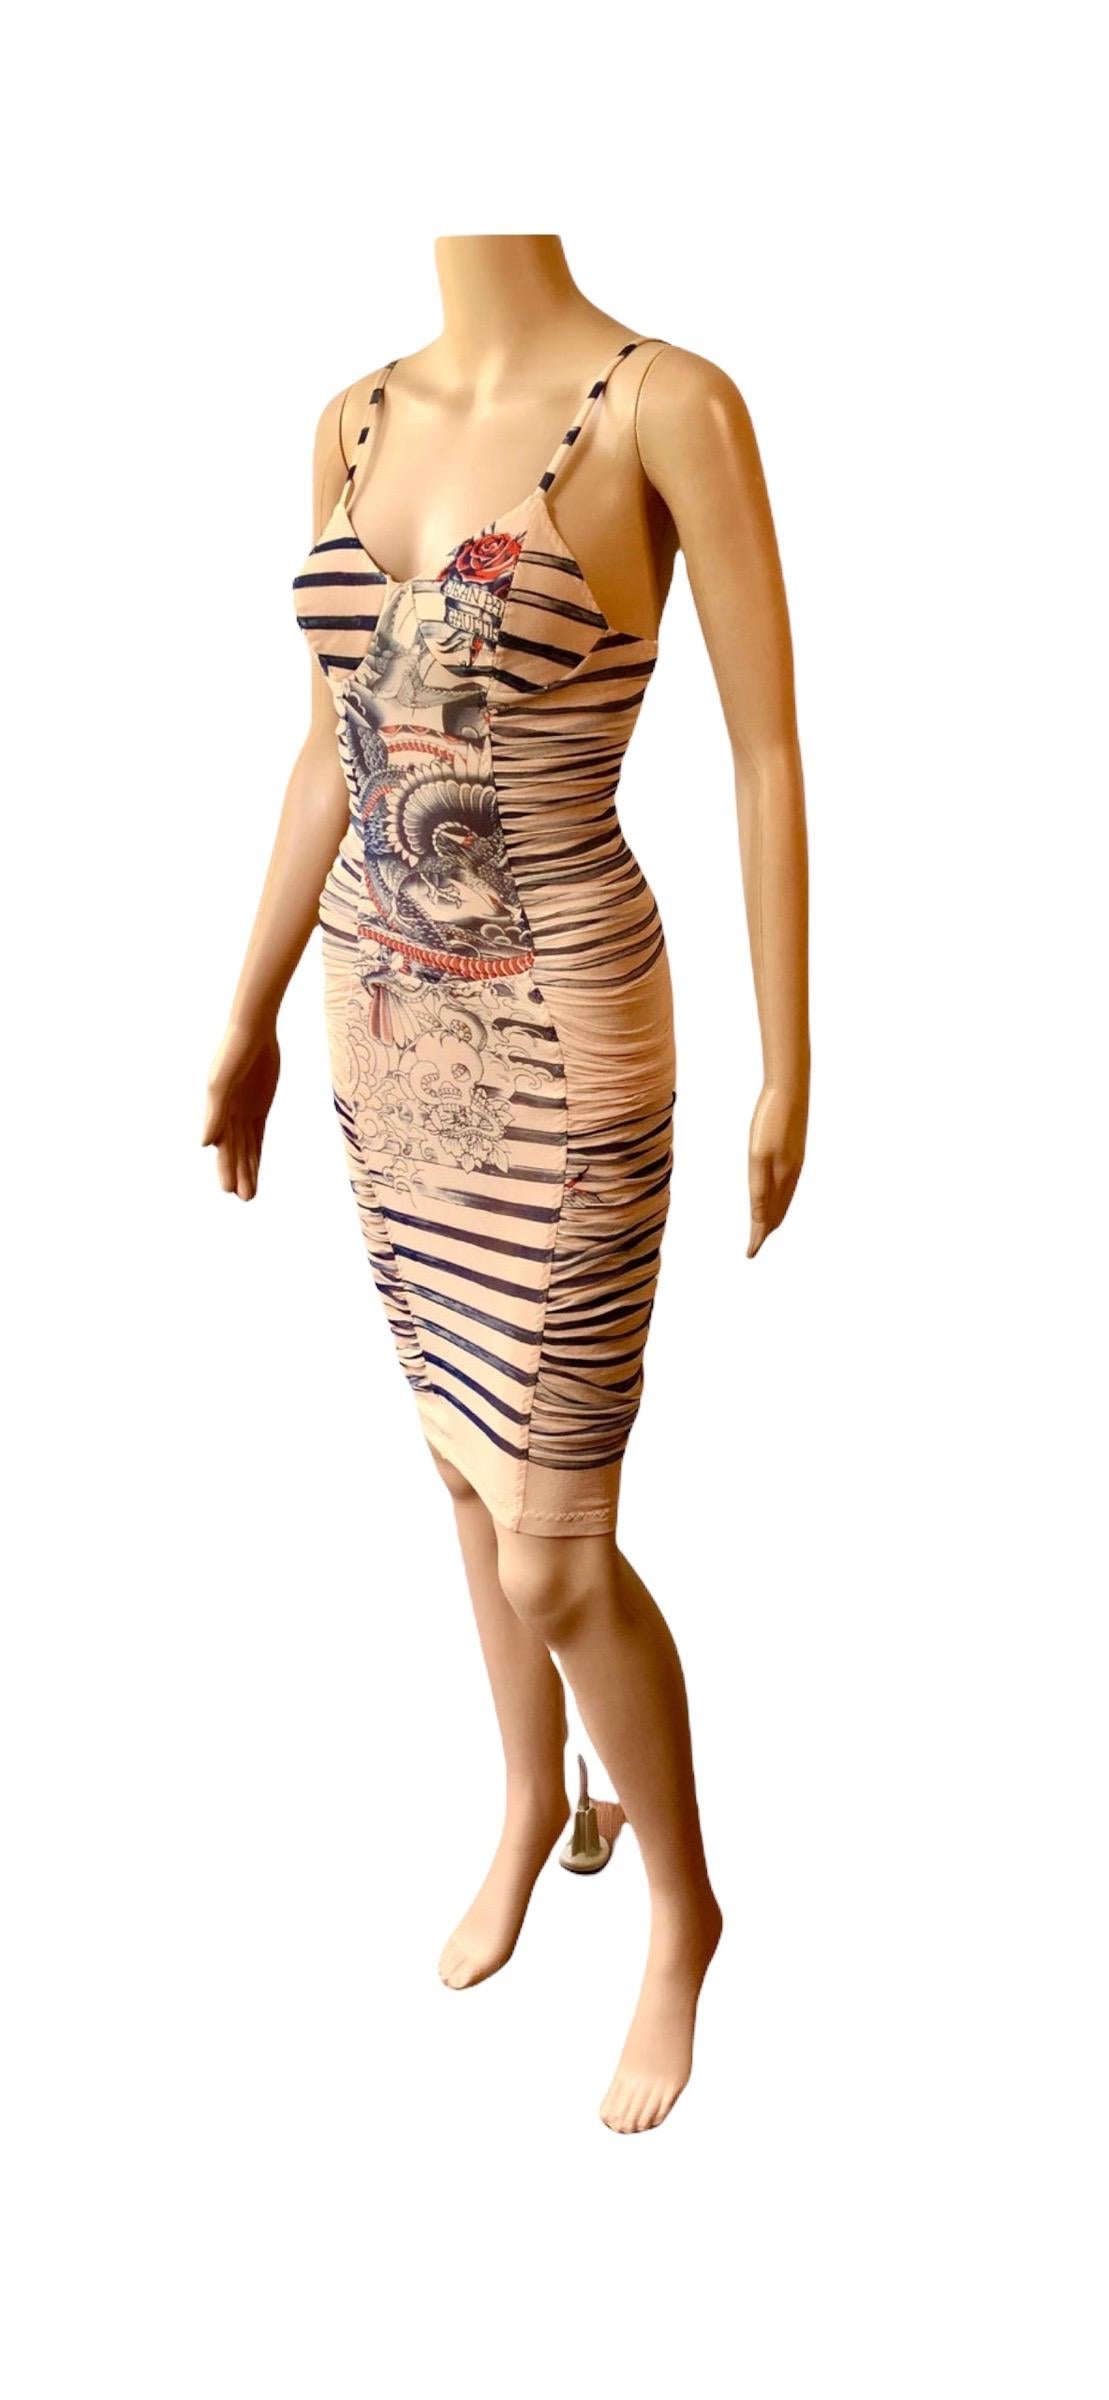 Jean Paul Gaultier Soleil S/S 2012 Tattoo Print Semi-Sheer Mesh Bodycon Dress 5